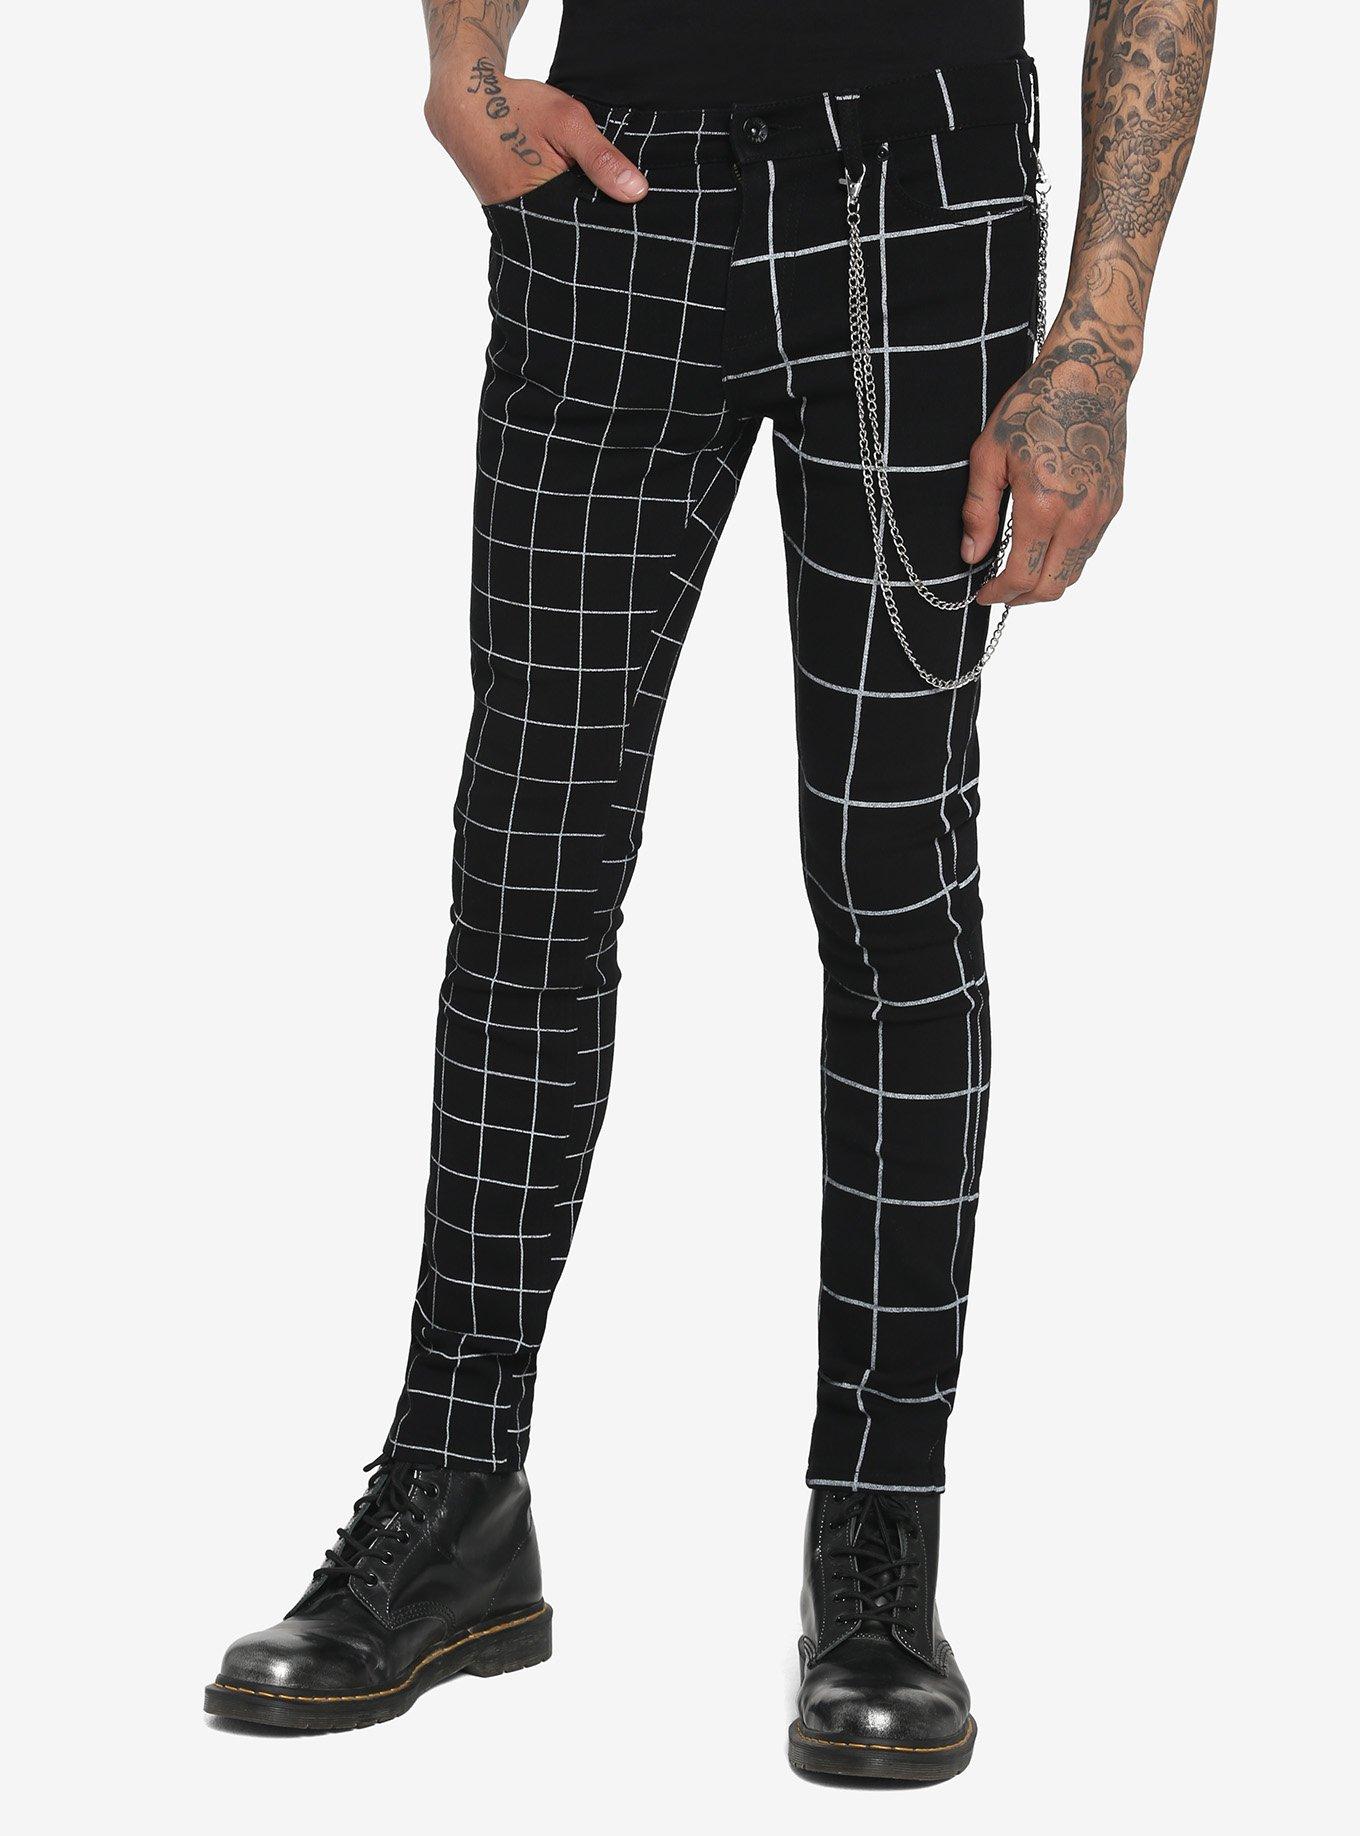 Black & White Double Grid Stinger Jeans, BLACK, hi-res